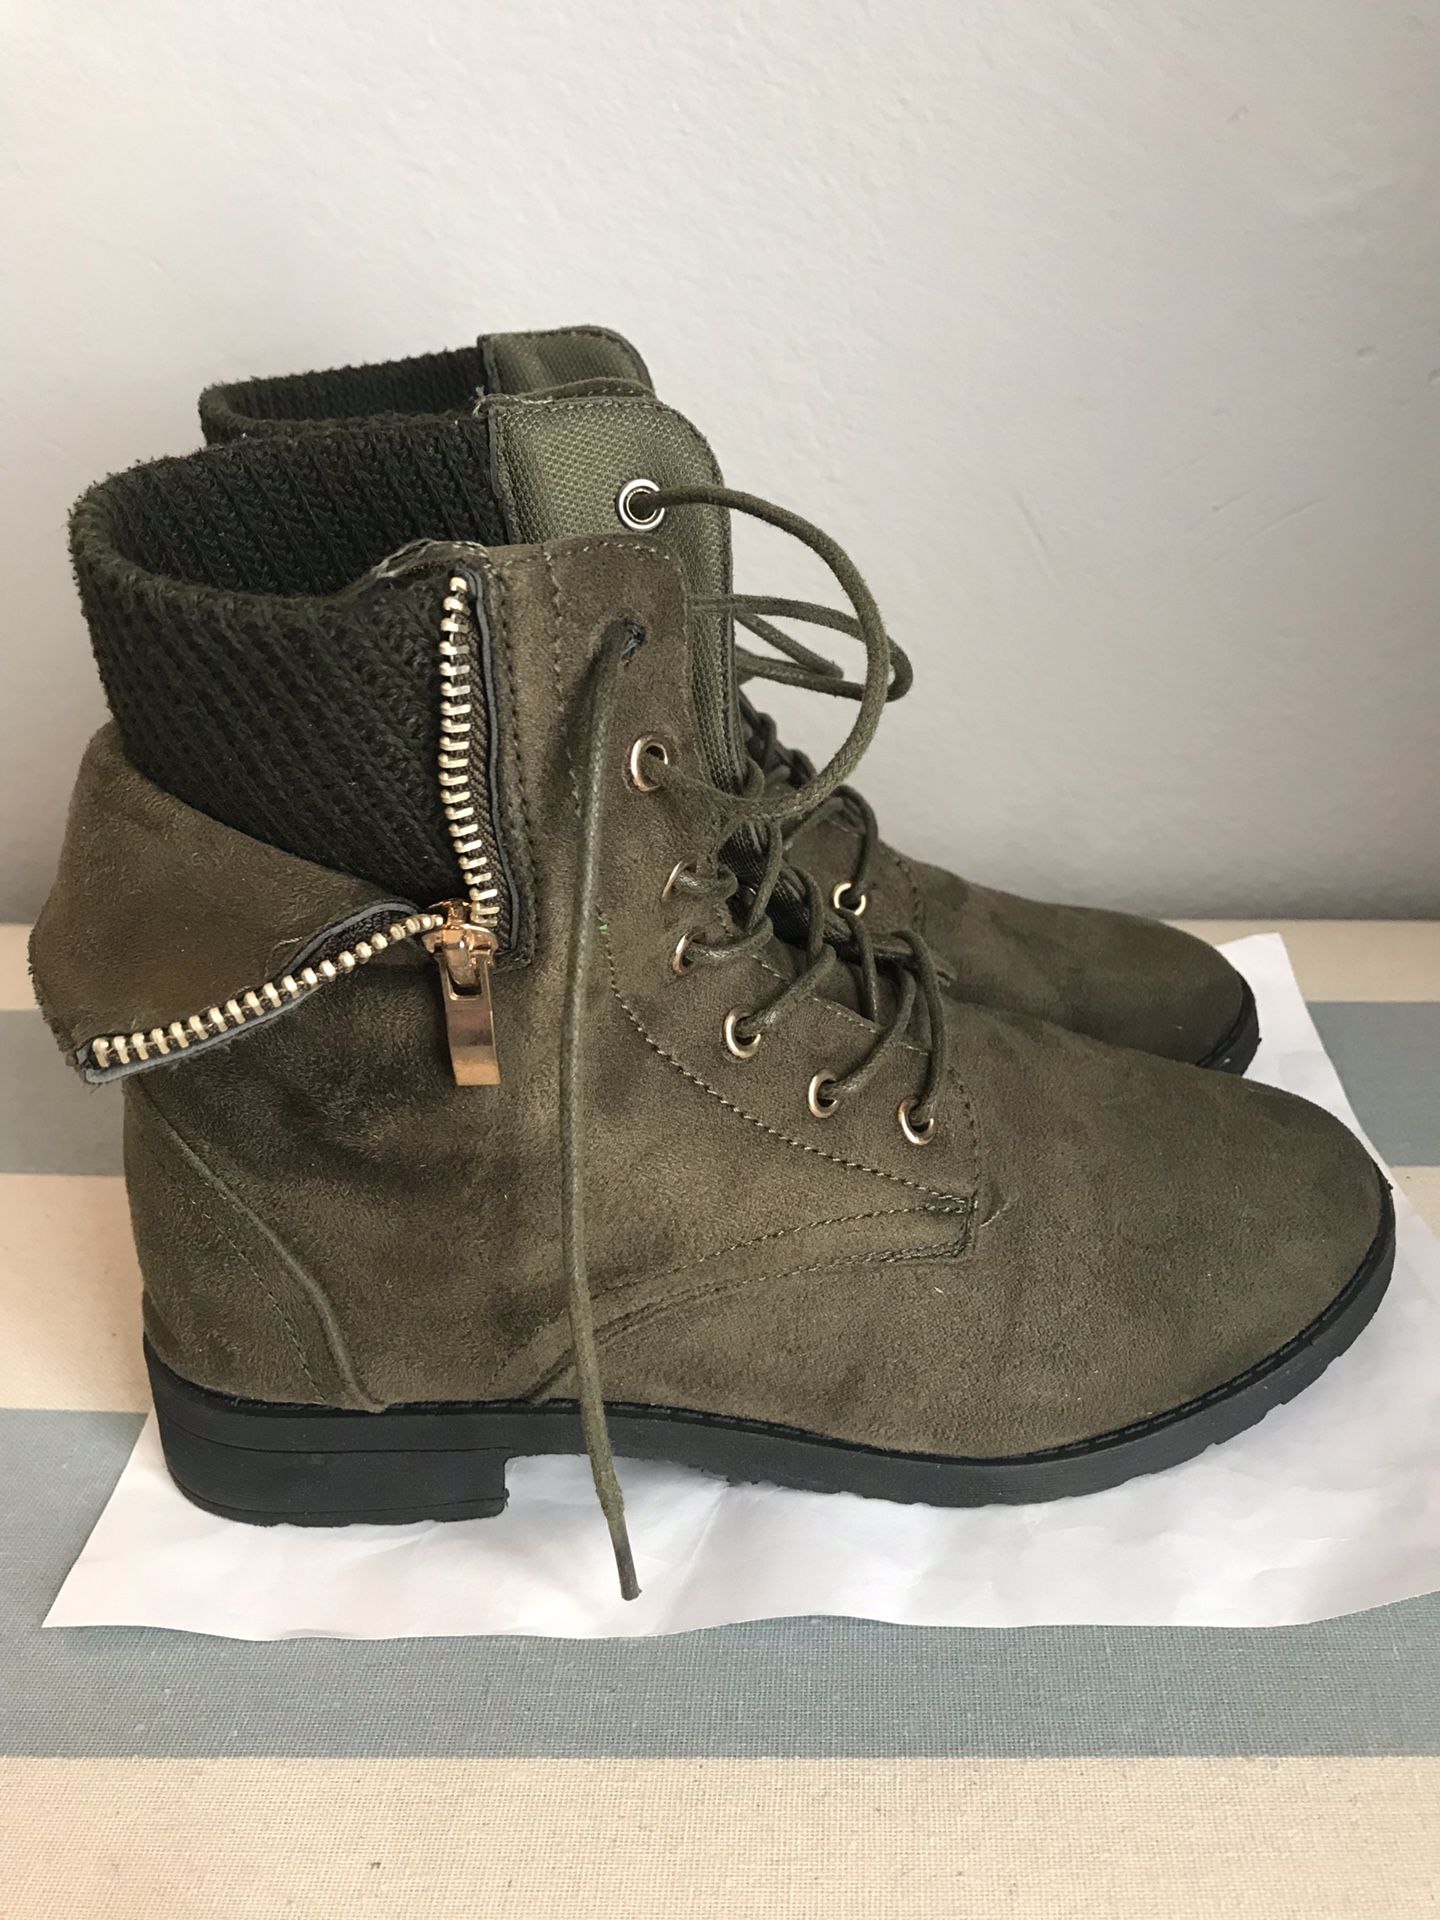 Women’s Size 8/Girls Size 6.5 Combat Boots